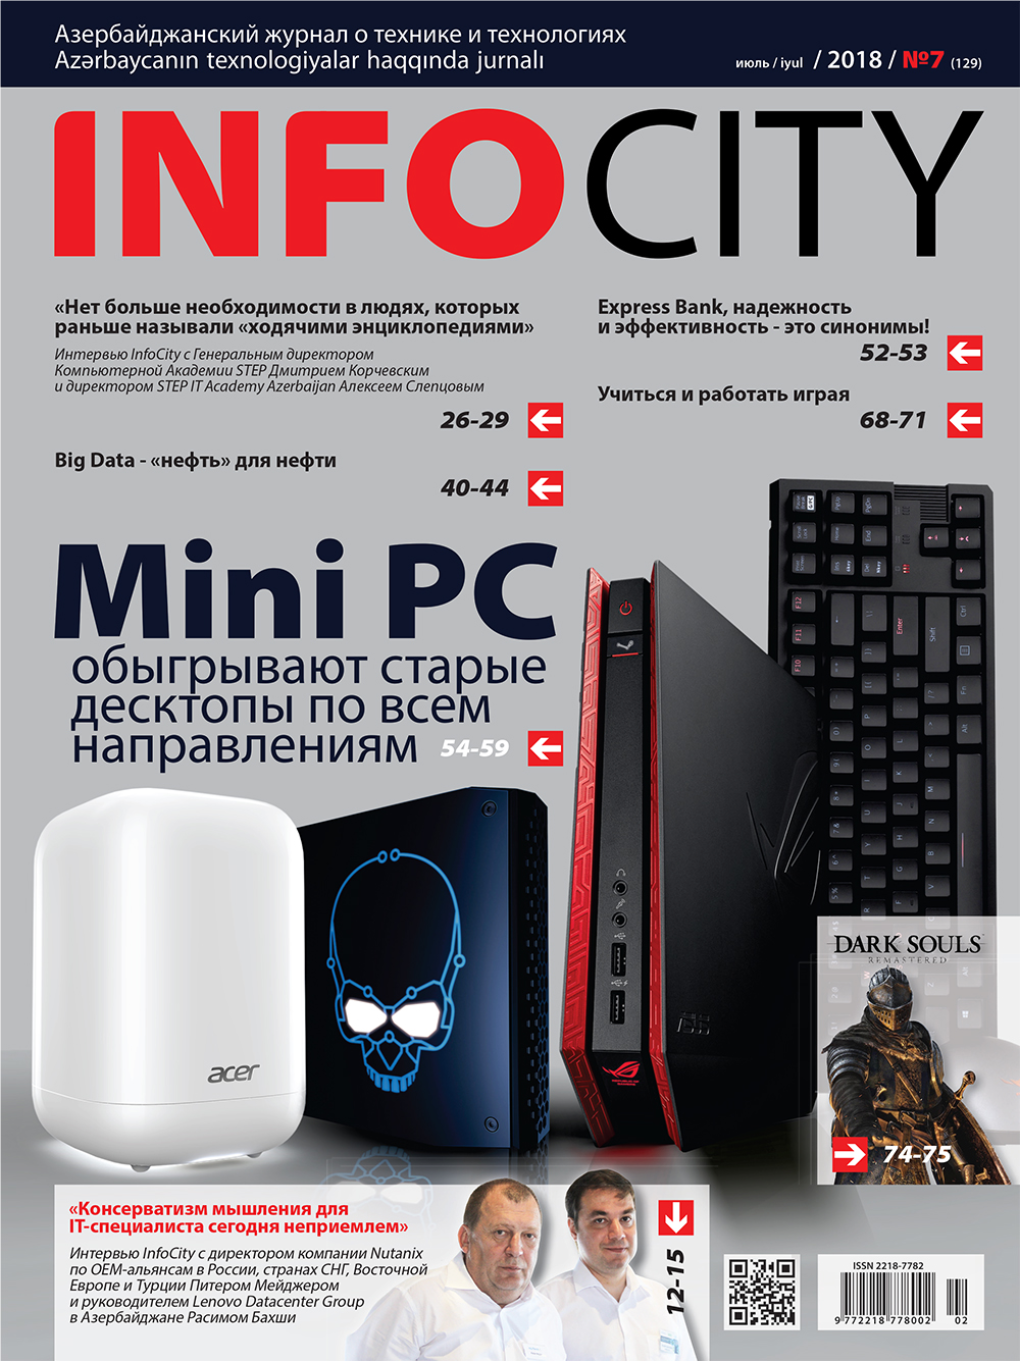 Infocity #129